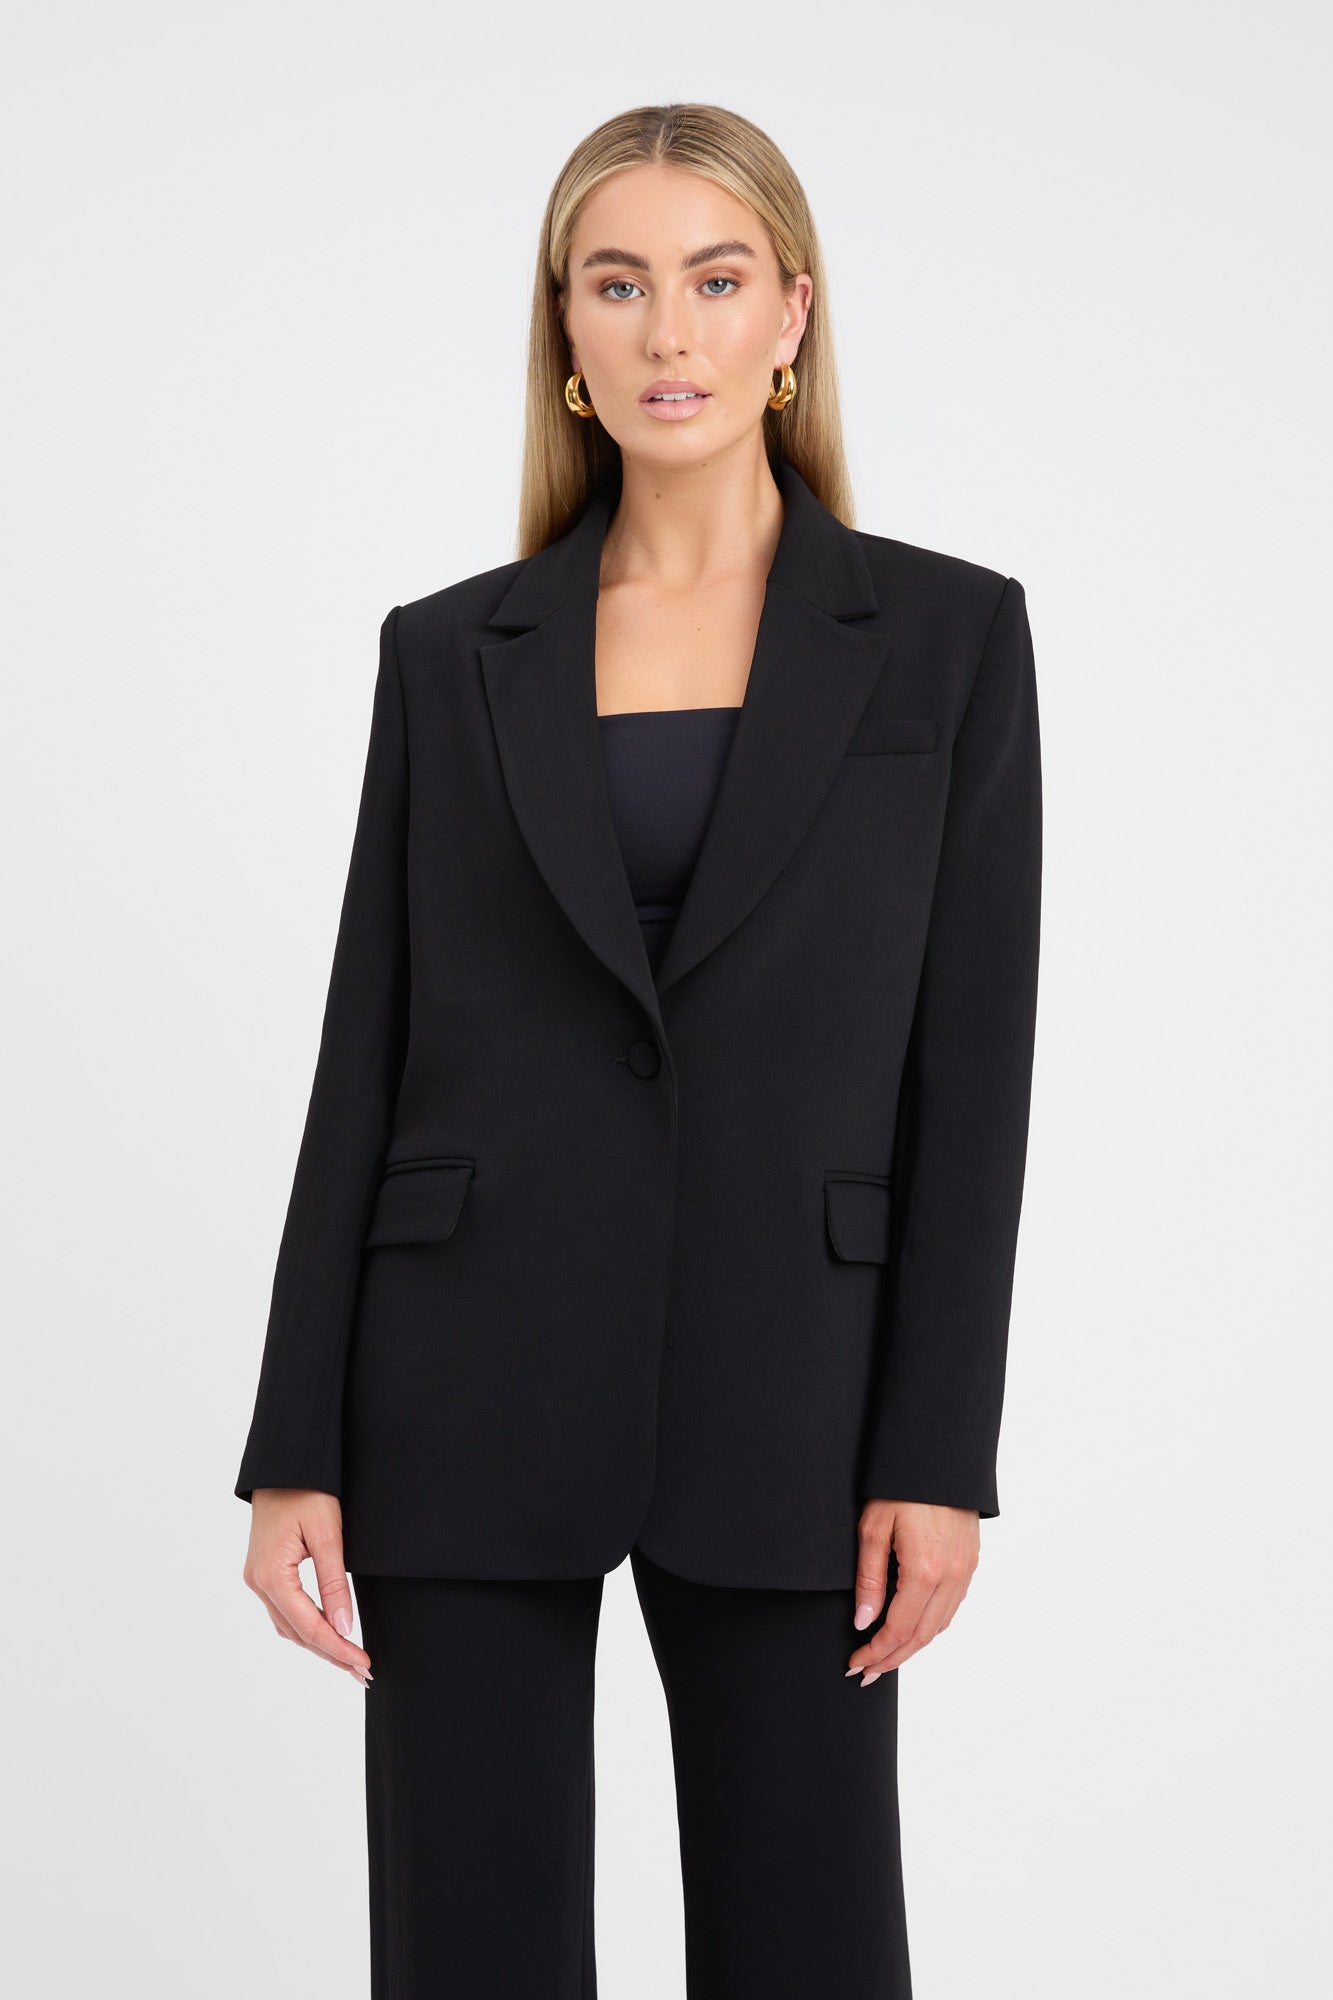 Shop Women's Jackets, Coats & Blazers at Max NZ | Explore our range.